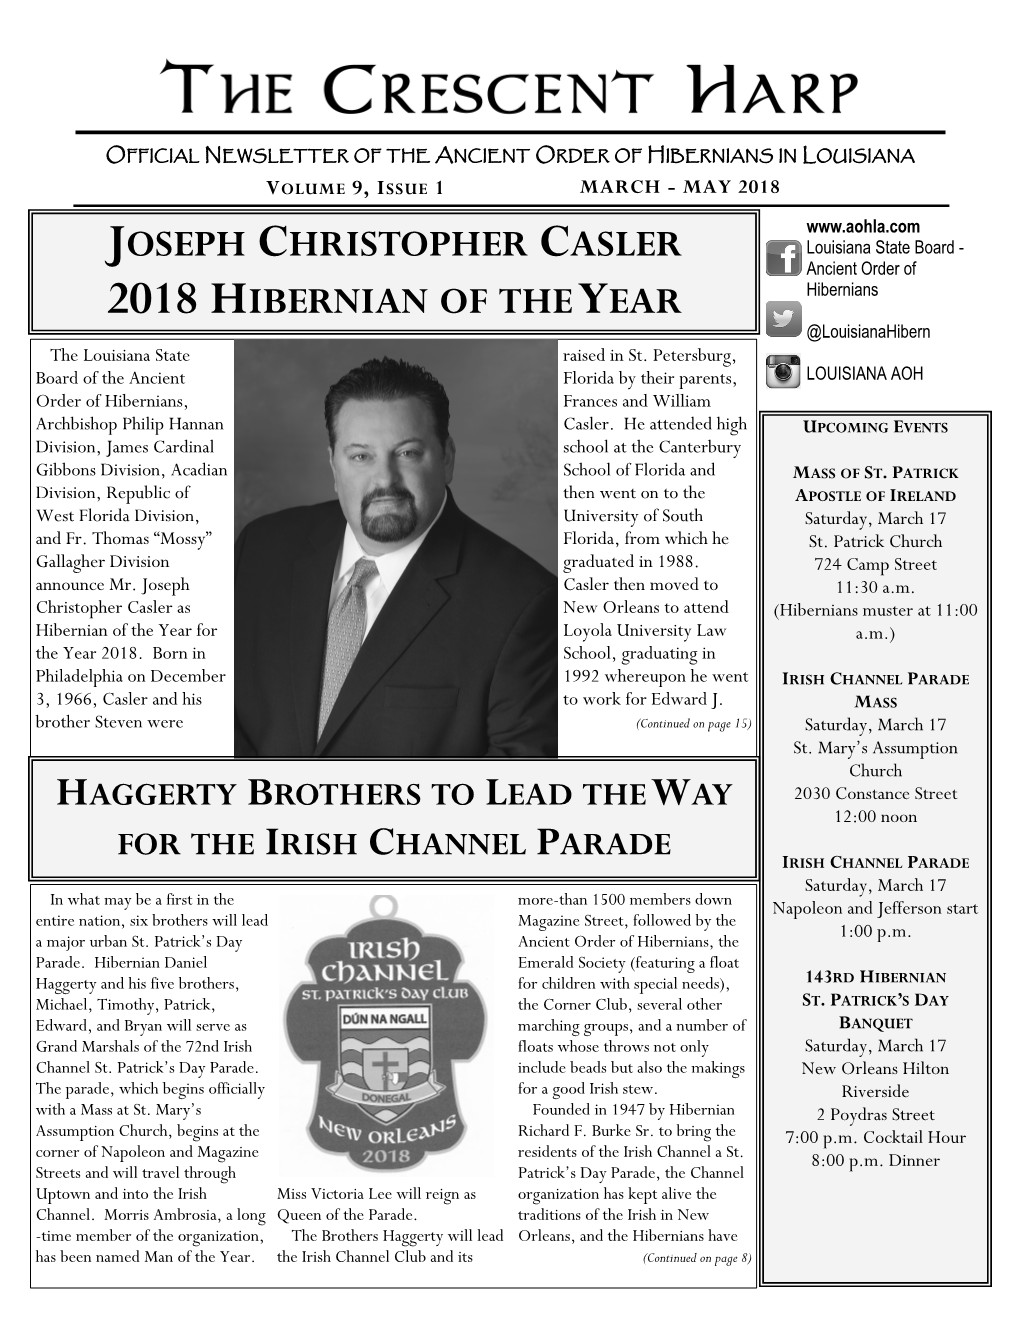 Joseph Christopher Casler 2018 Hibernian of the Year